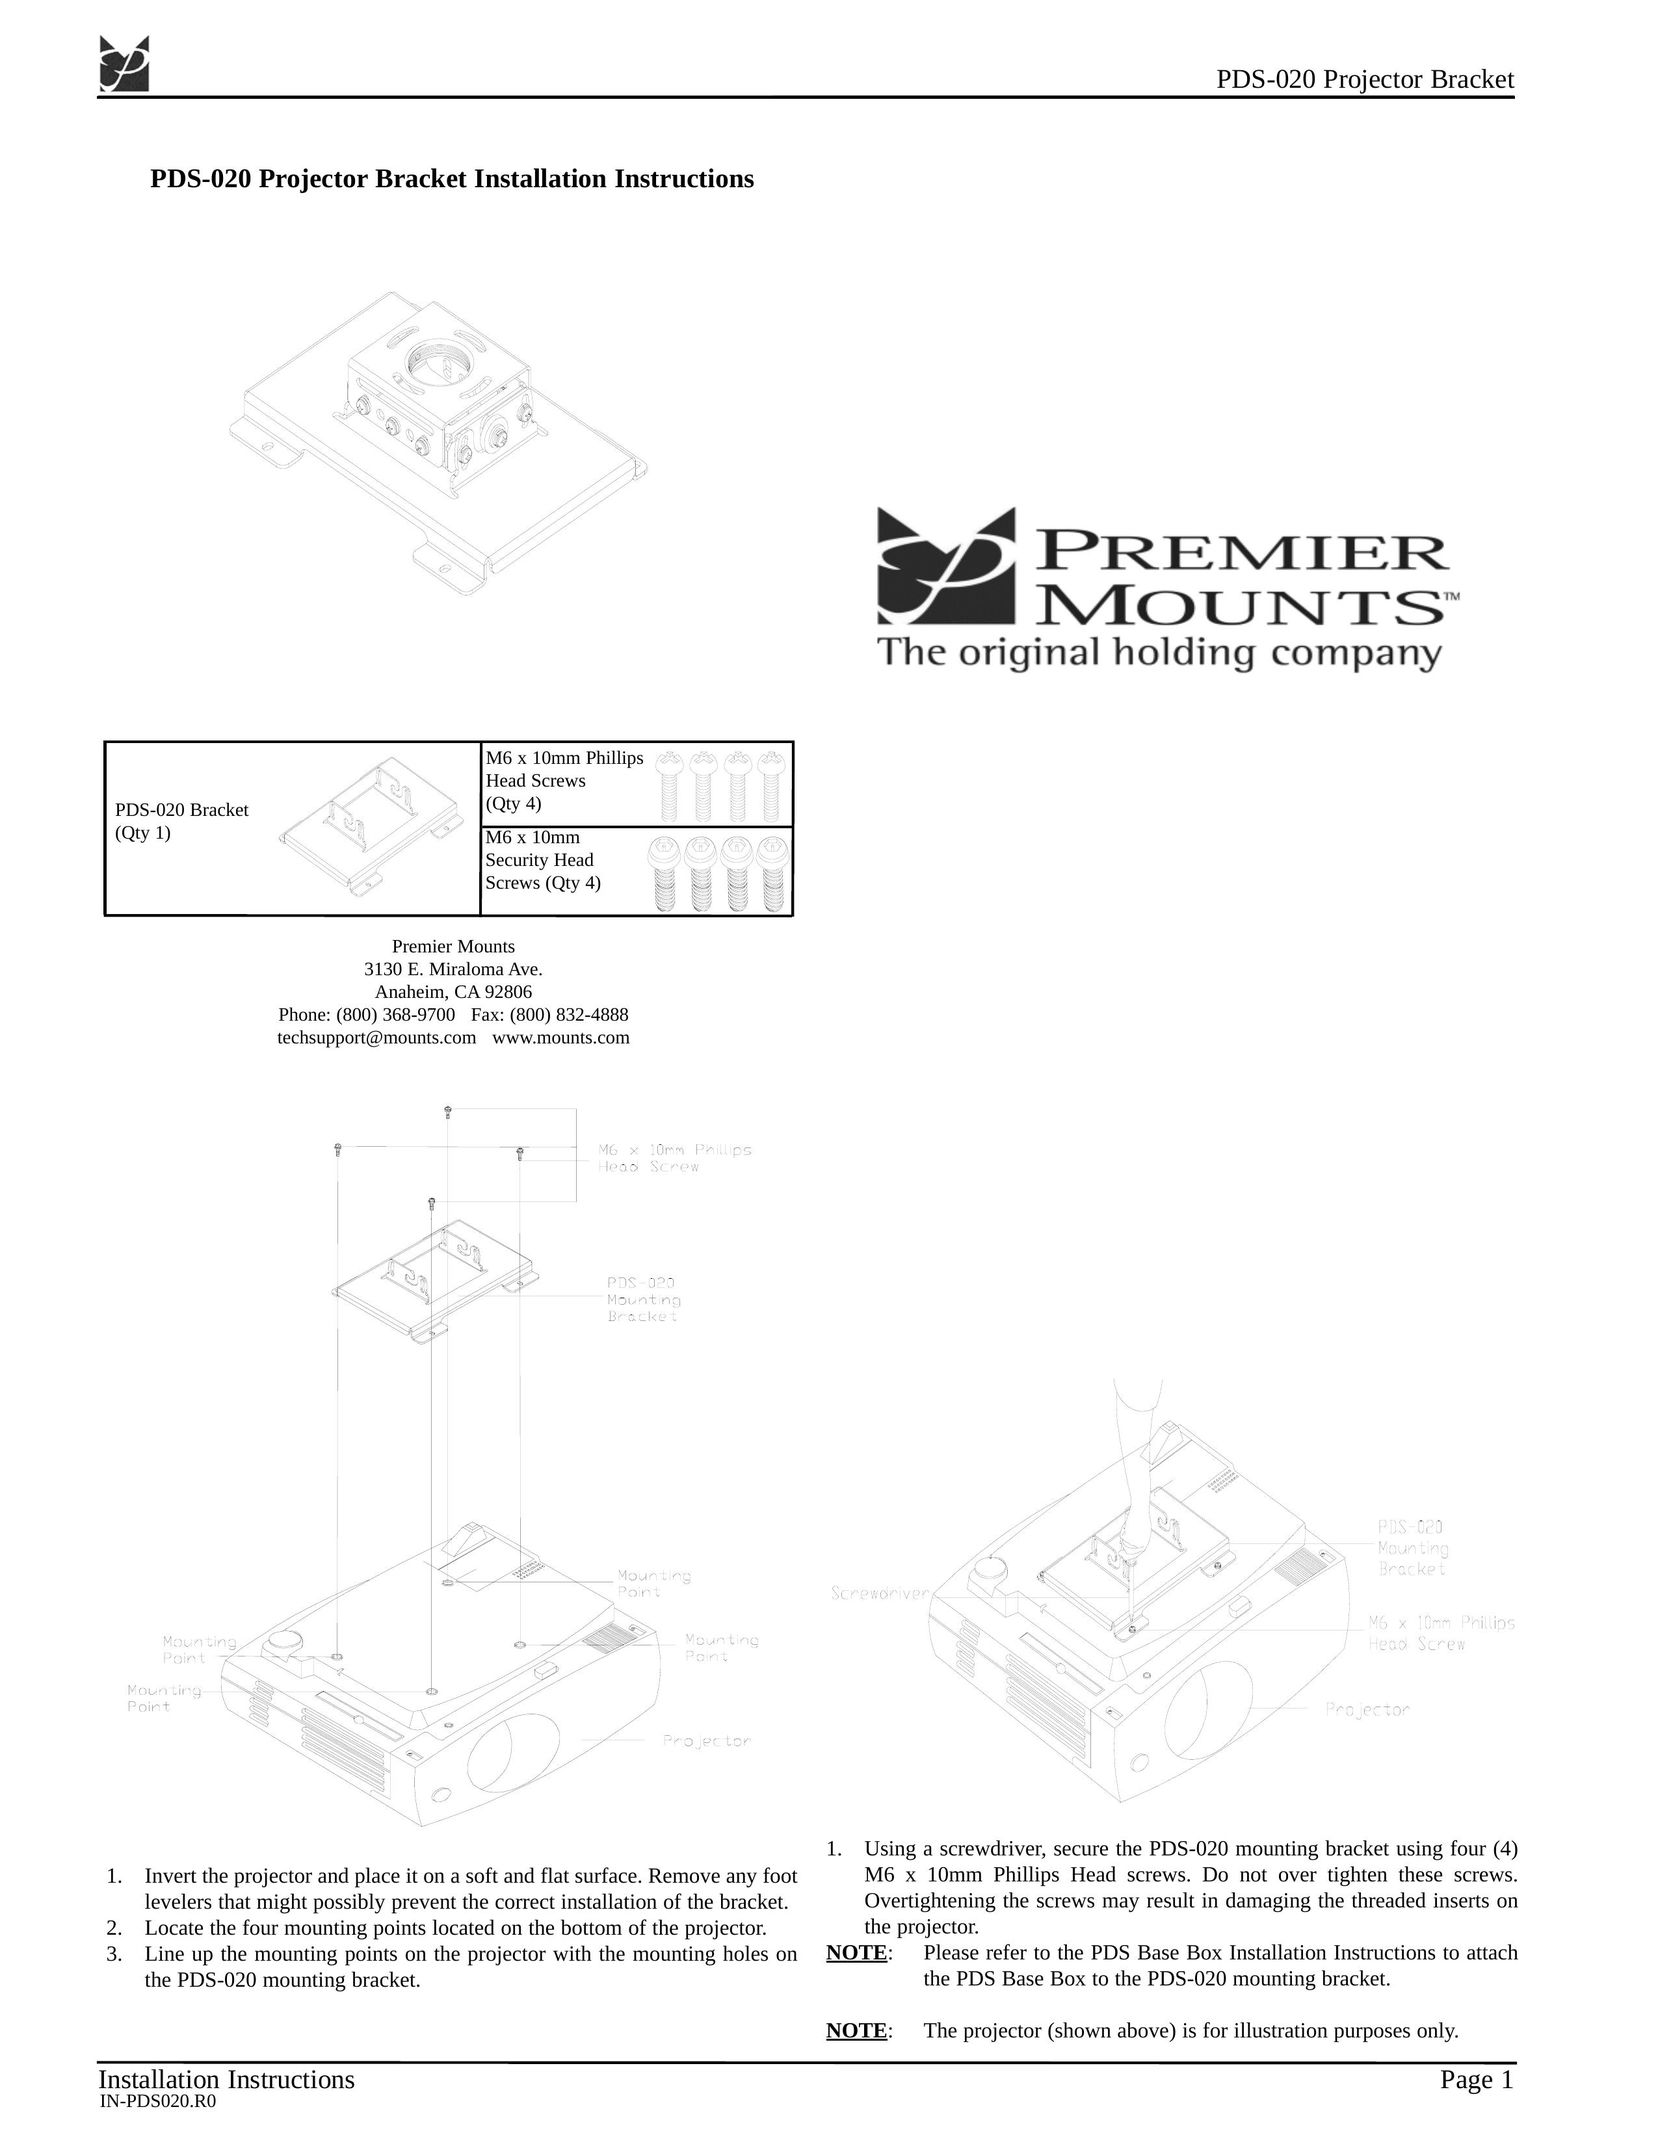 Premier Mounts PDS-020 Indoor Furnishings User Manual